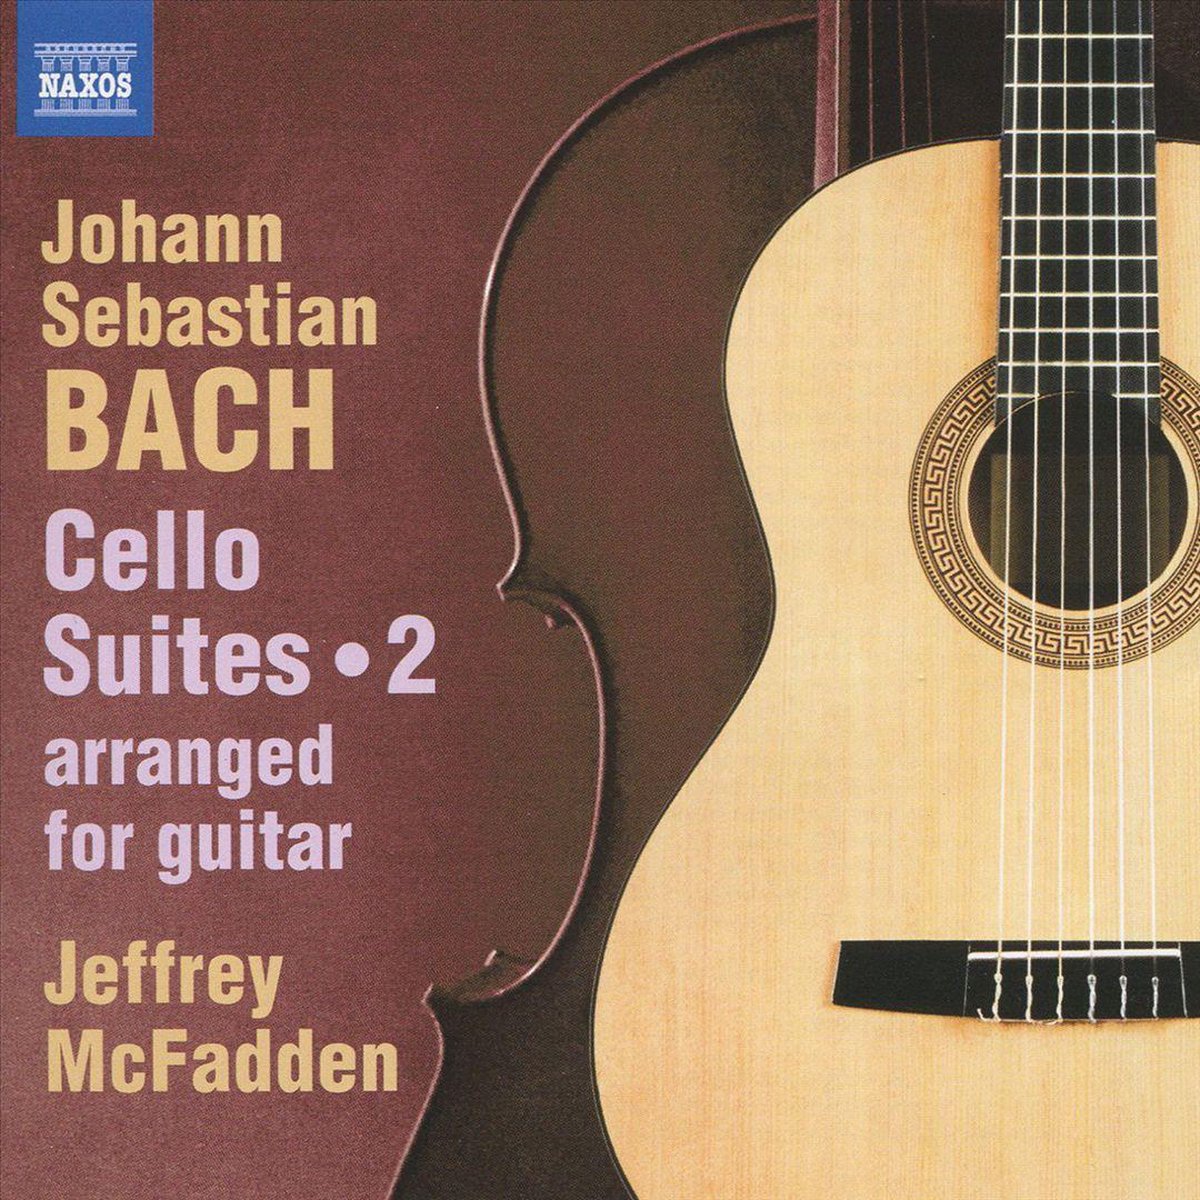 Johann Sebastian Bach: Cello Suites, Vol. 2 (Arranged for Guitar) | Jeffrey Mcfadden, Johann Sebastian Bach